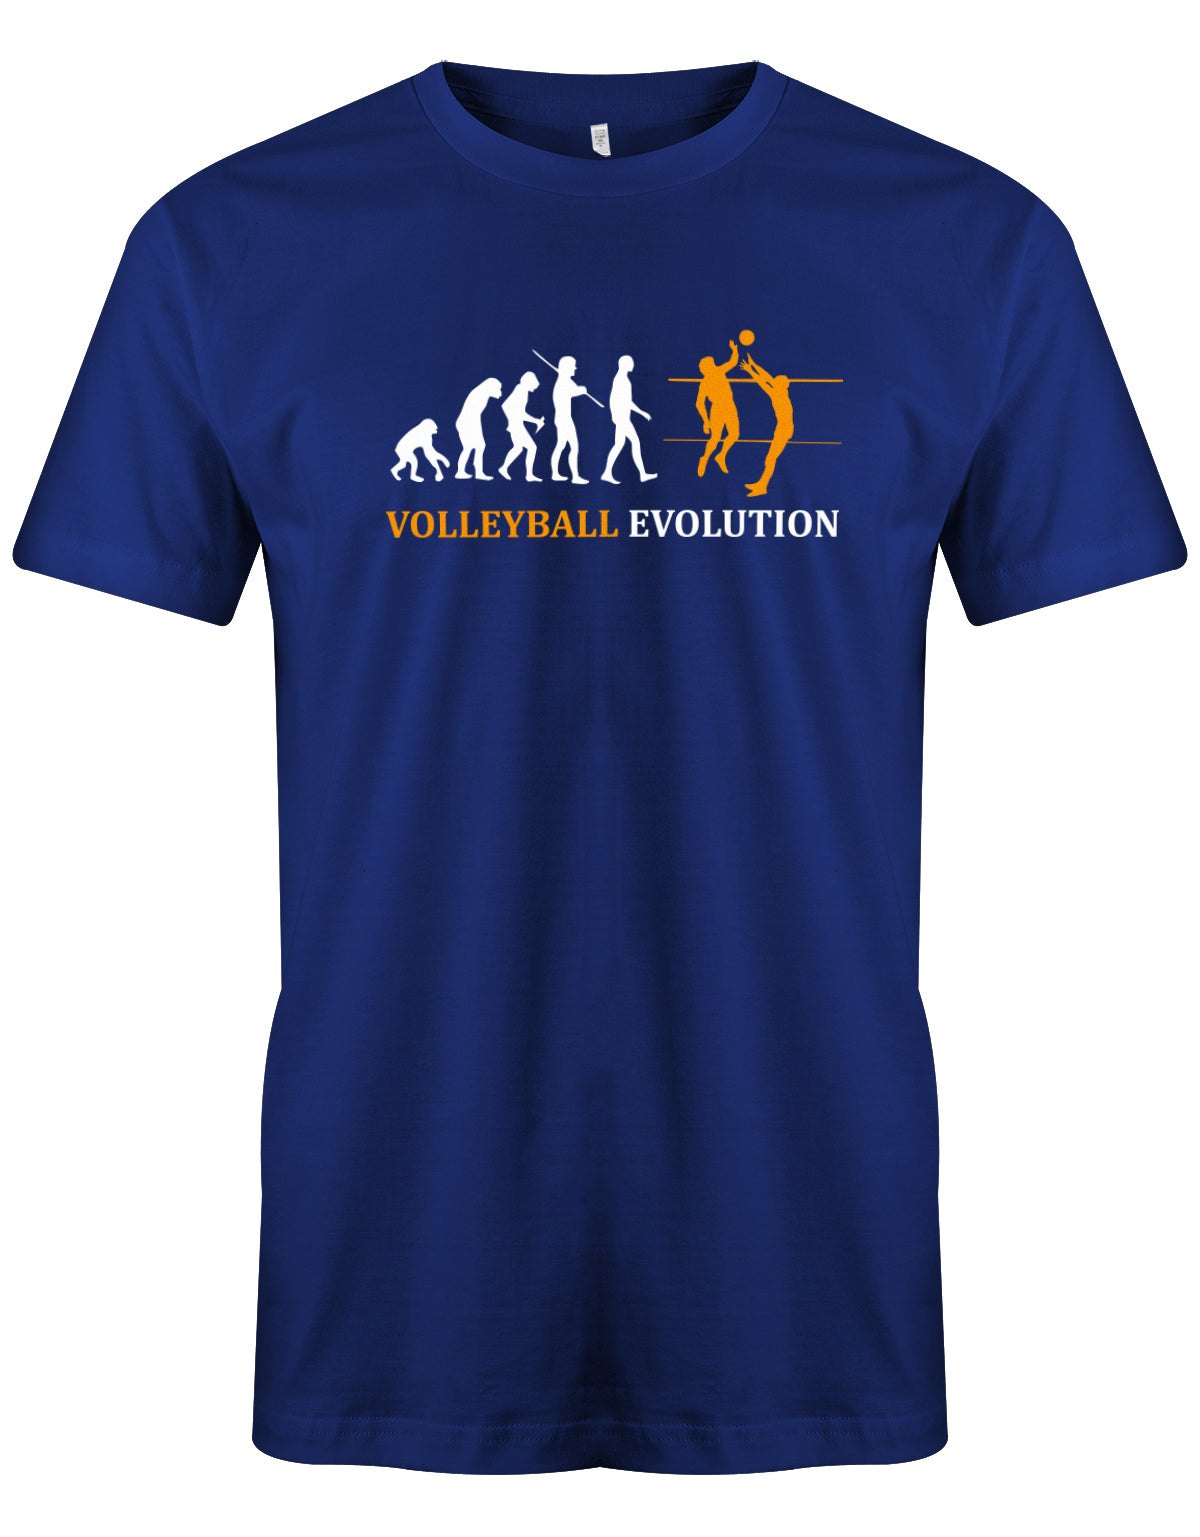 volleyball-evolution-herren-shirt-royalblau